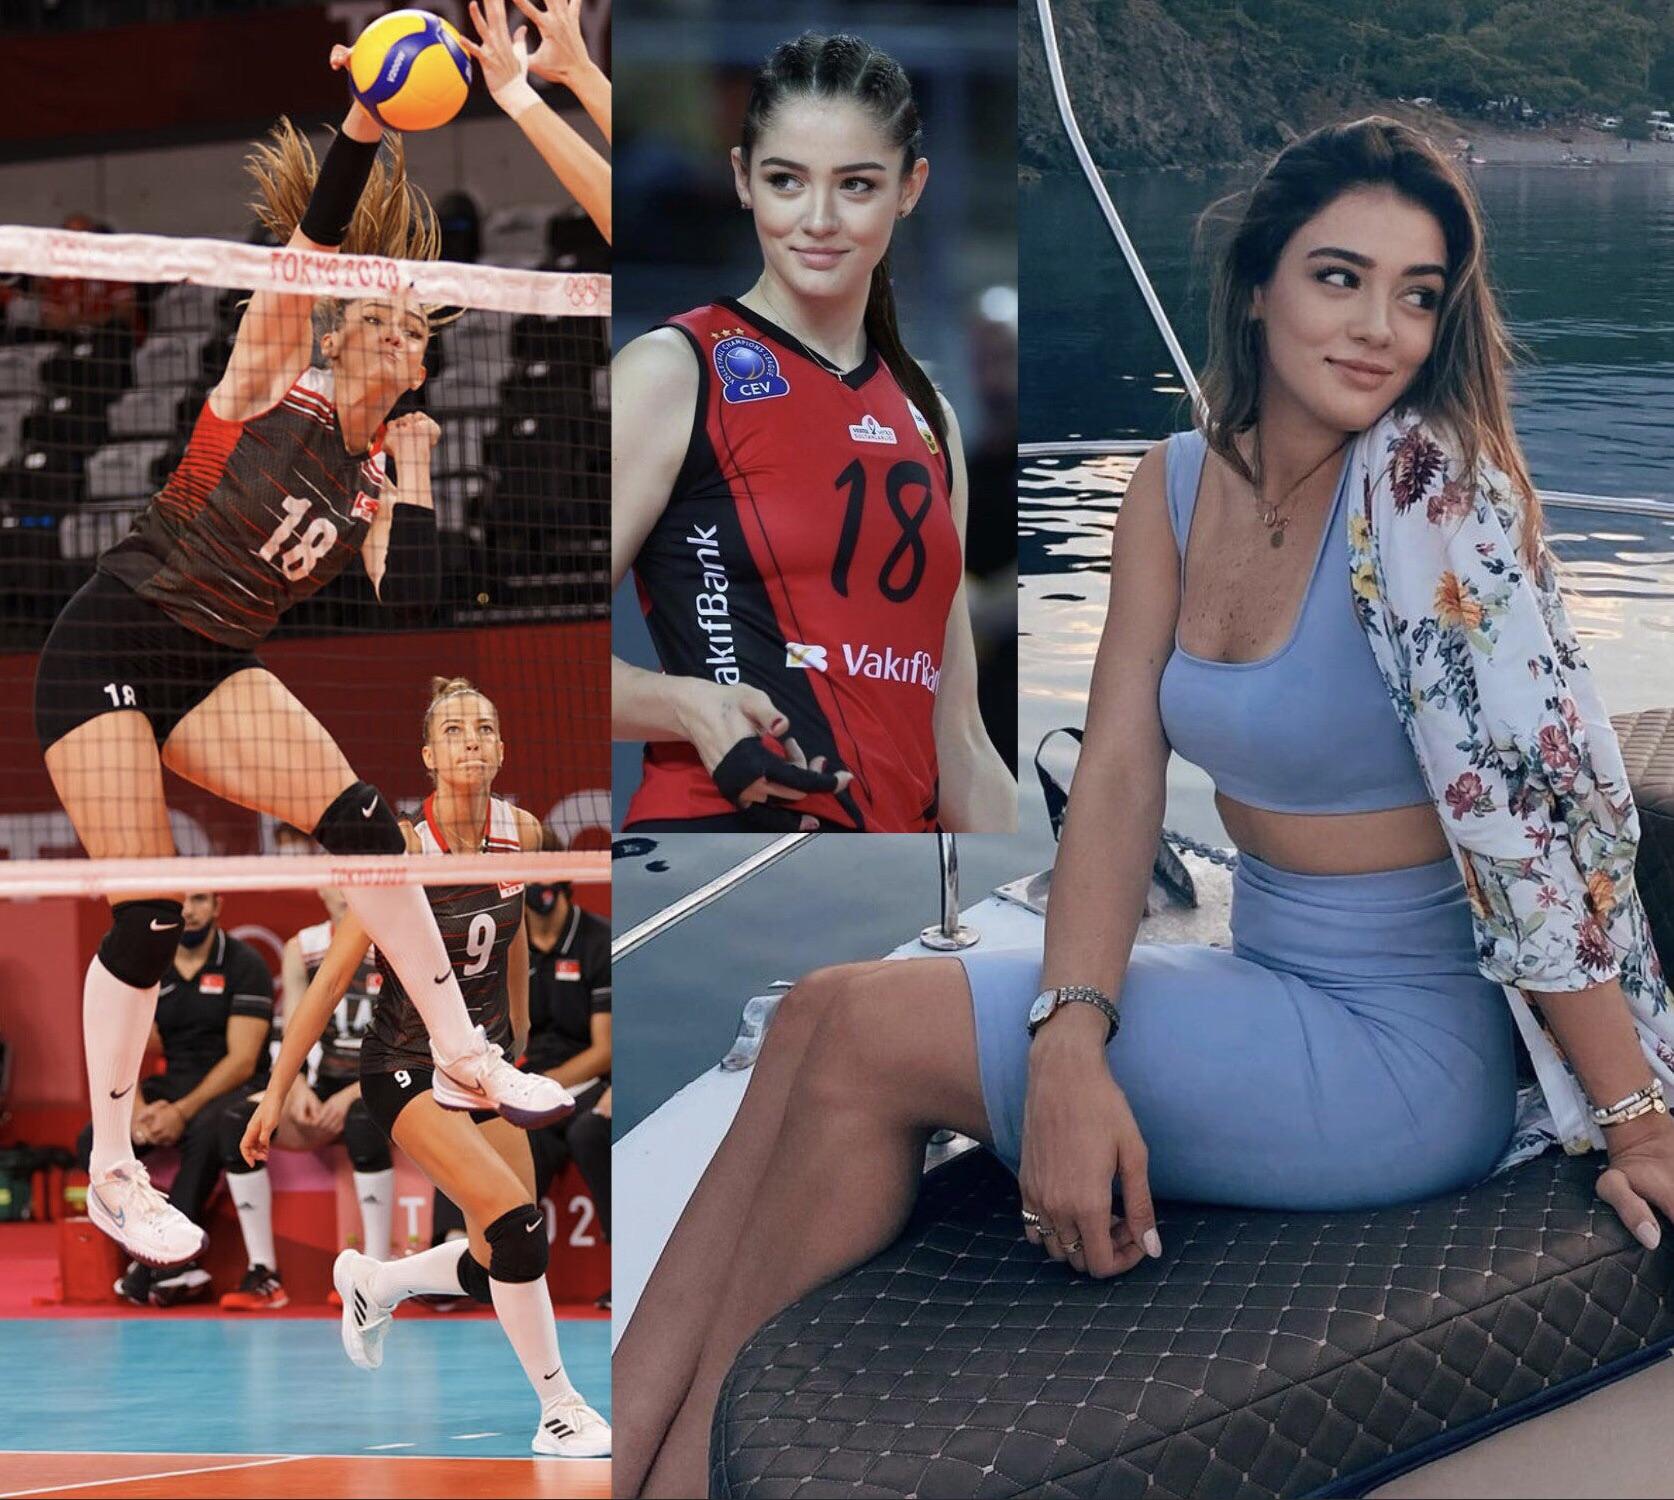 Volleyball Girl Lesbian Porn - 6'6' tall Turkish volleyball player Zehra Gunes